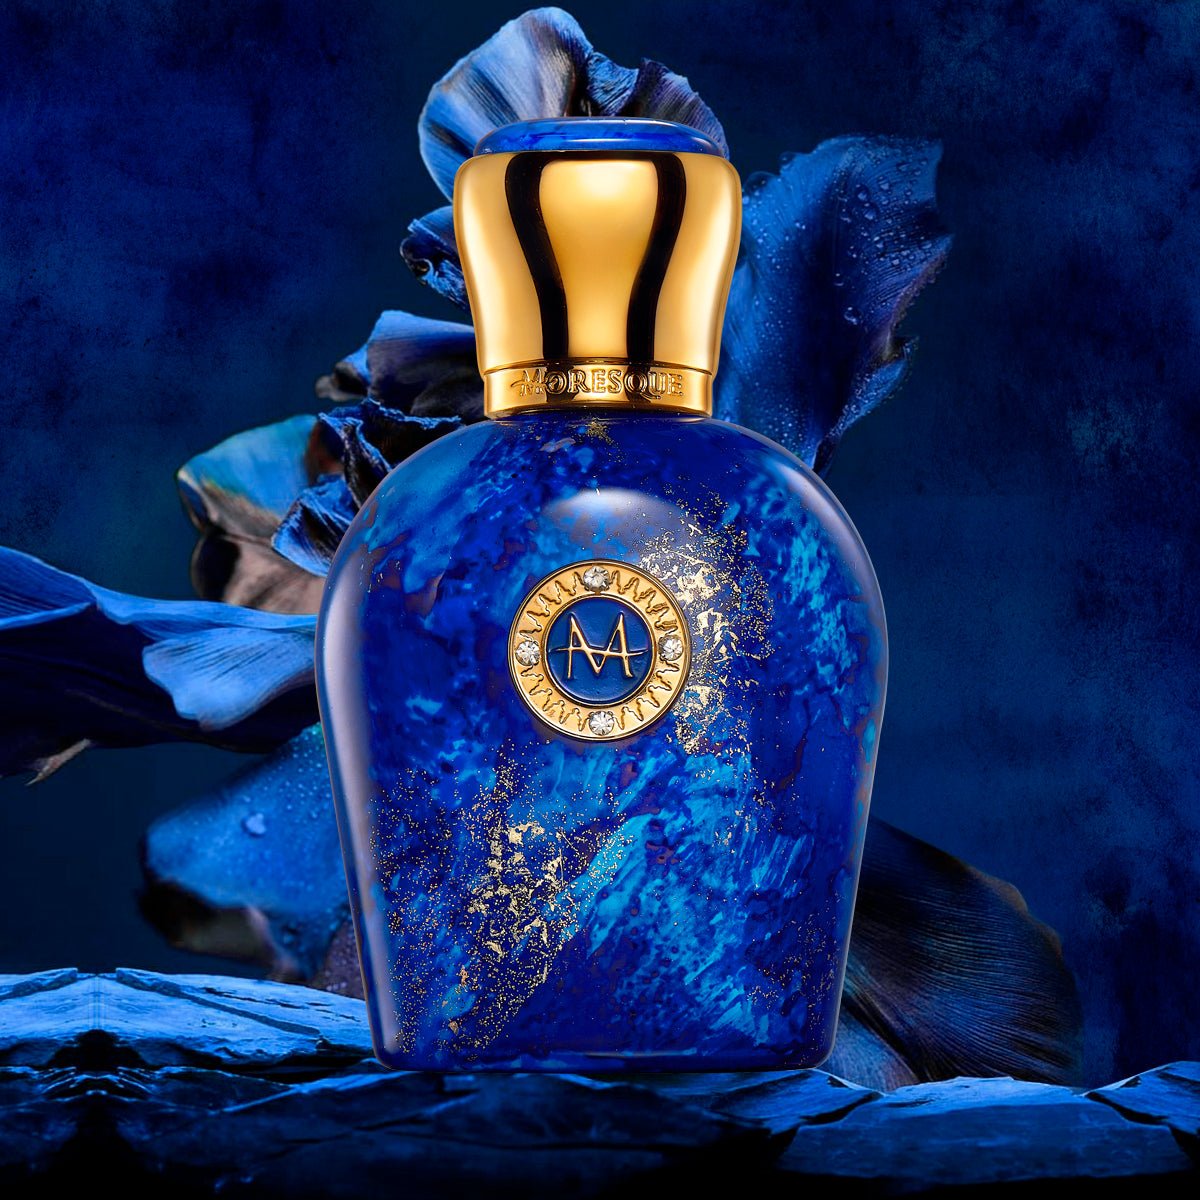 Moresque Parfums Sahara Blue Perfume & Cologne 1.7 oz/50 ml ScentRabbit